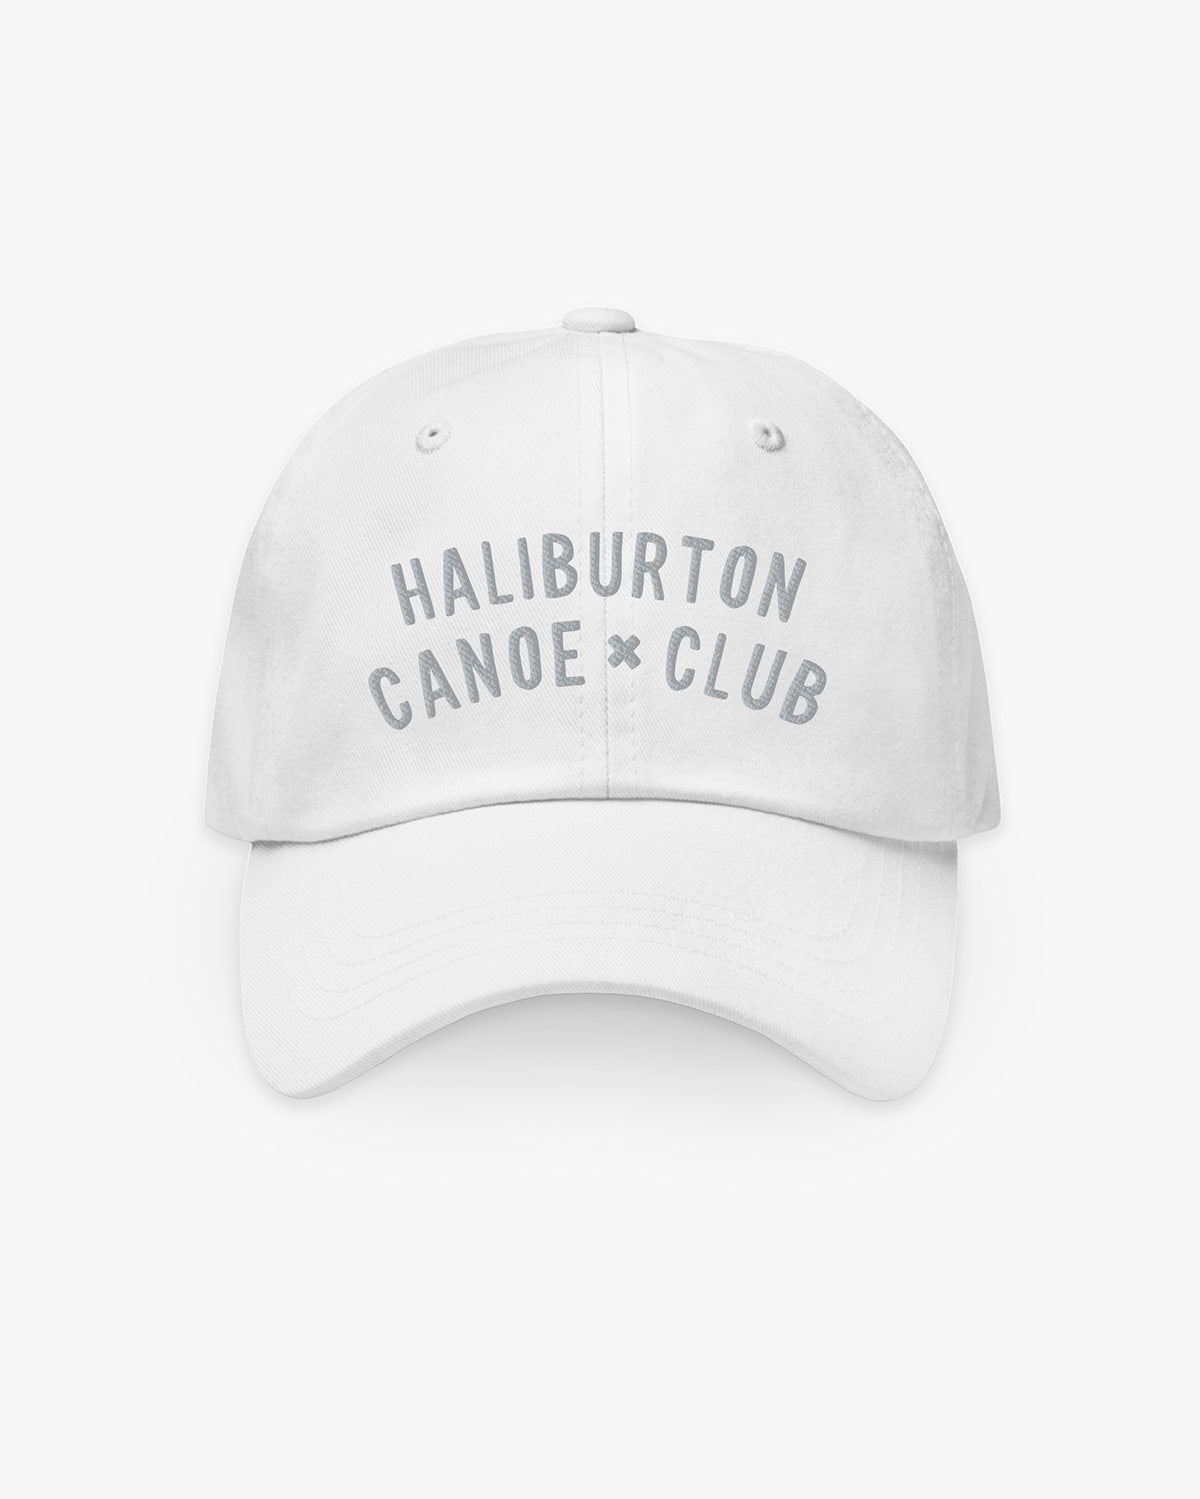 Canoe Club - Haliburton - Hat